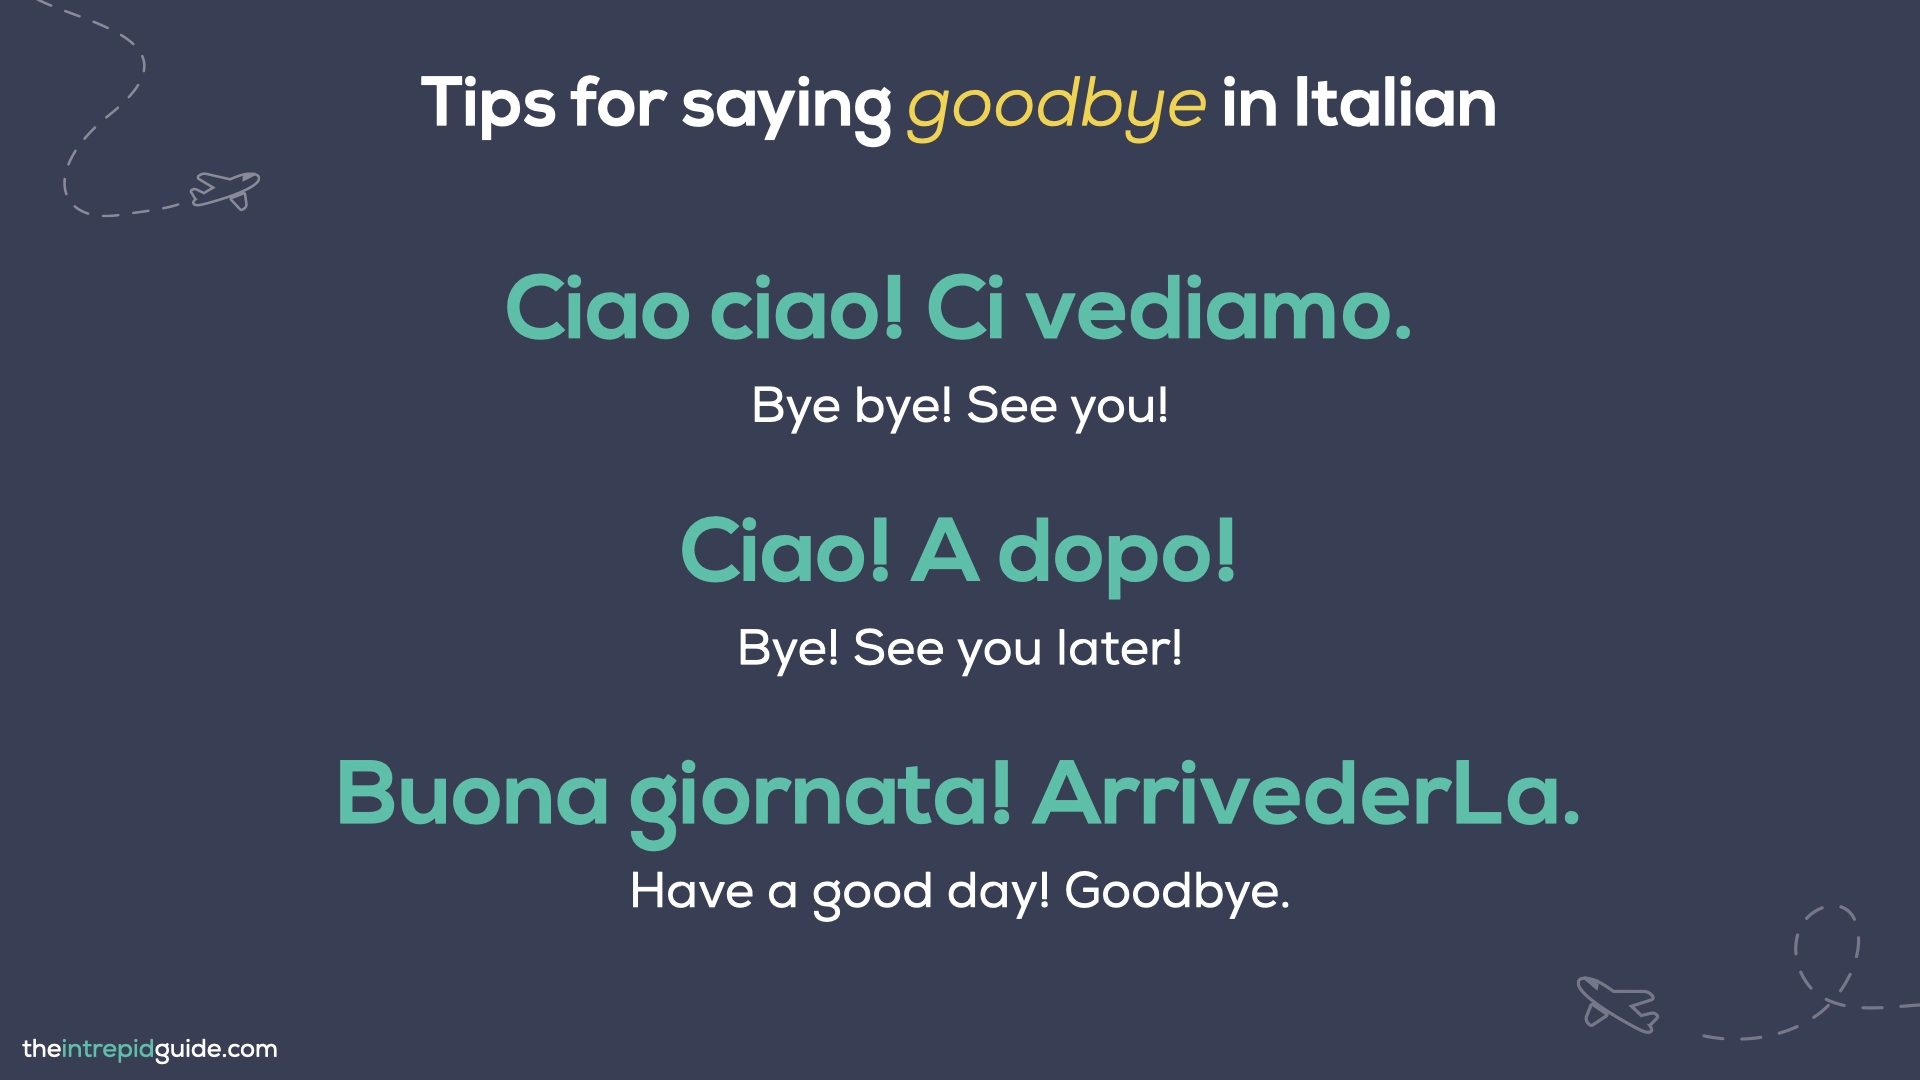 How to Say Goodbye in Italian - Tips for saying goodbye in Italian